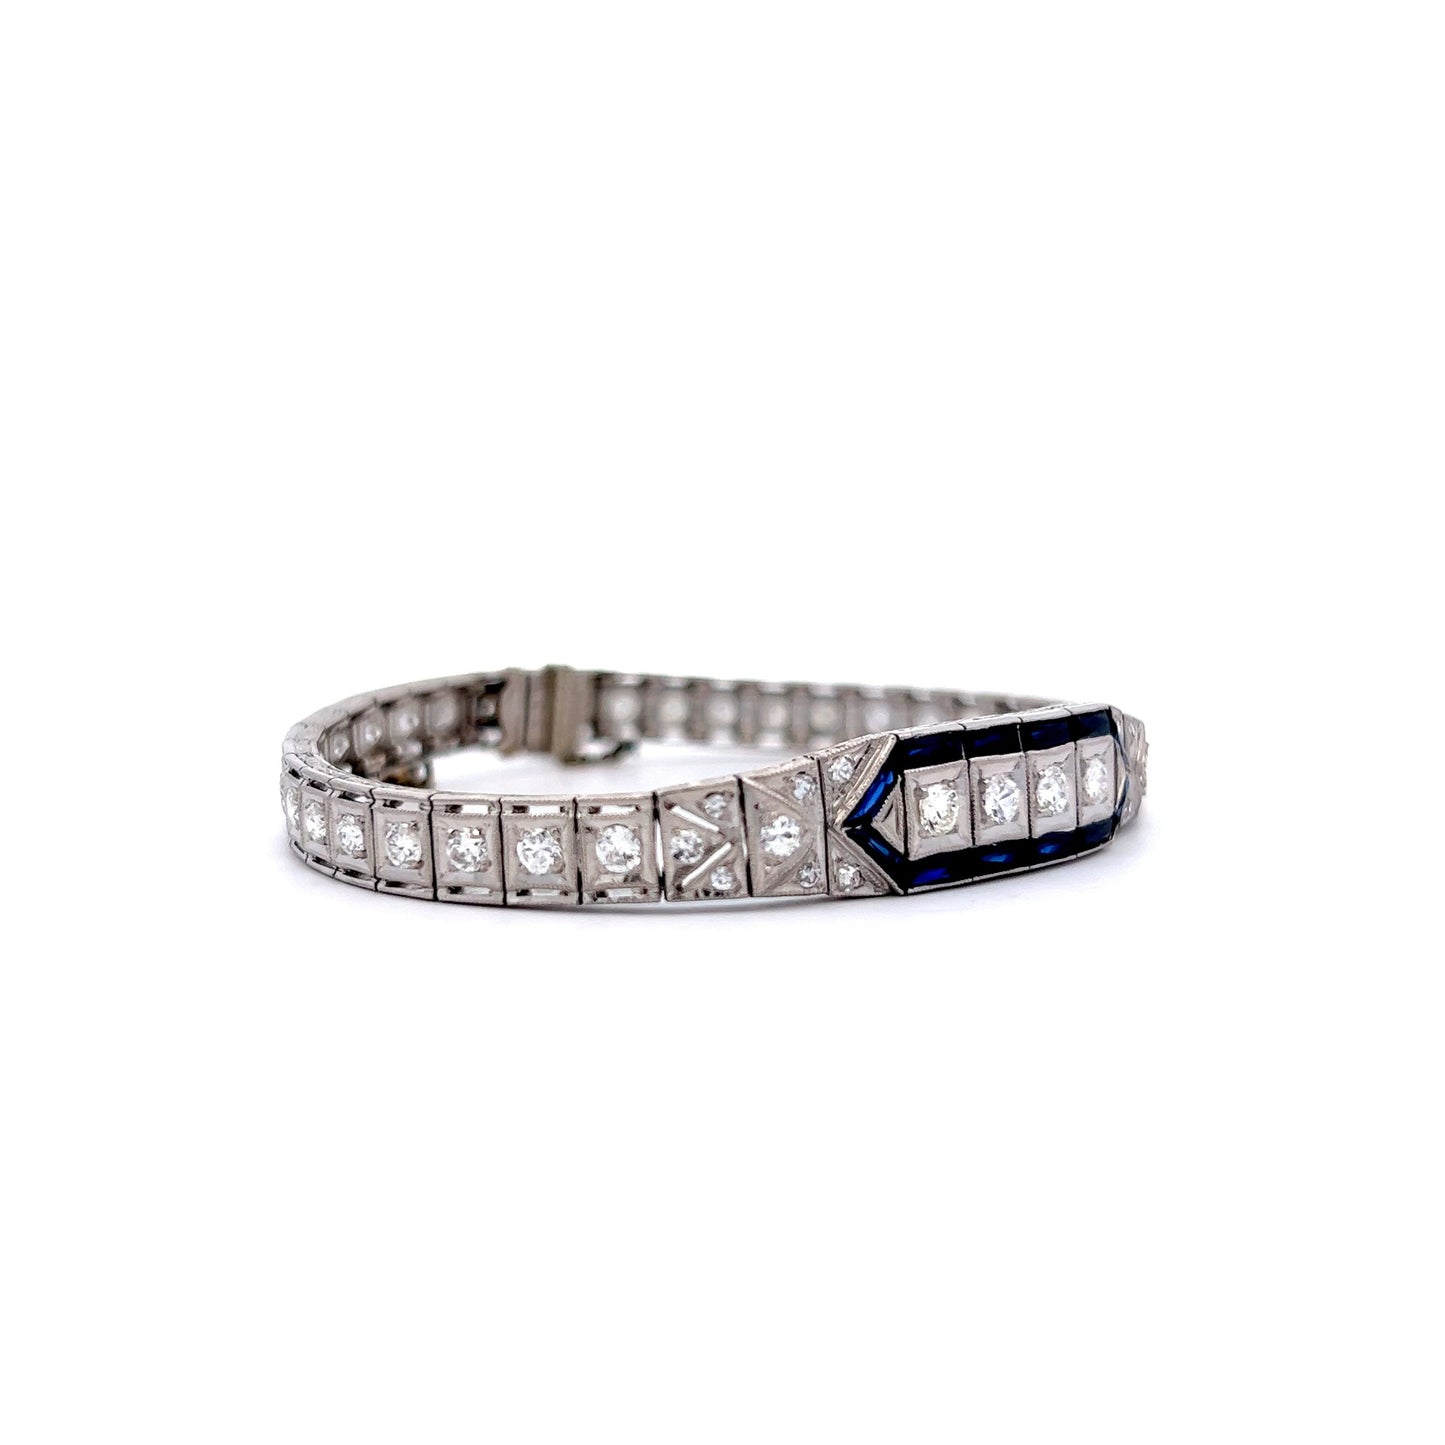 Antique Art Deco Sapphire Bracelet in 14k White Gold